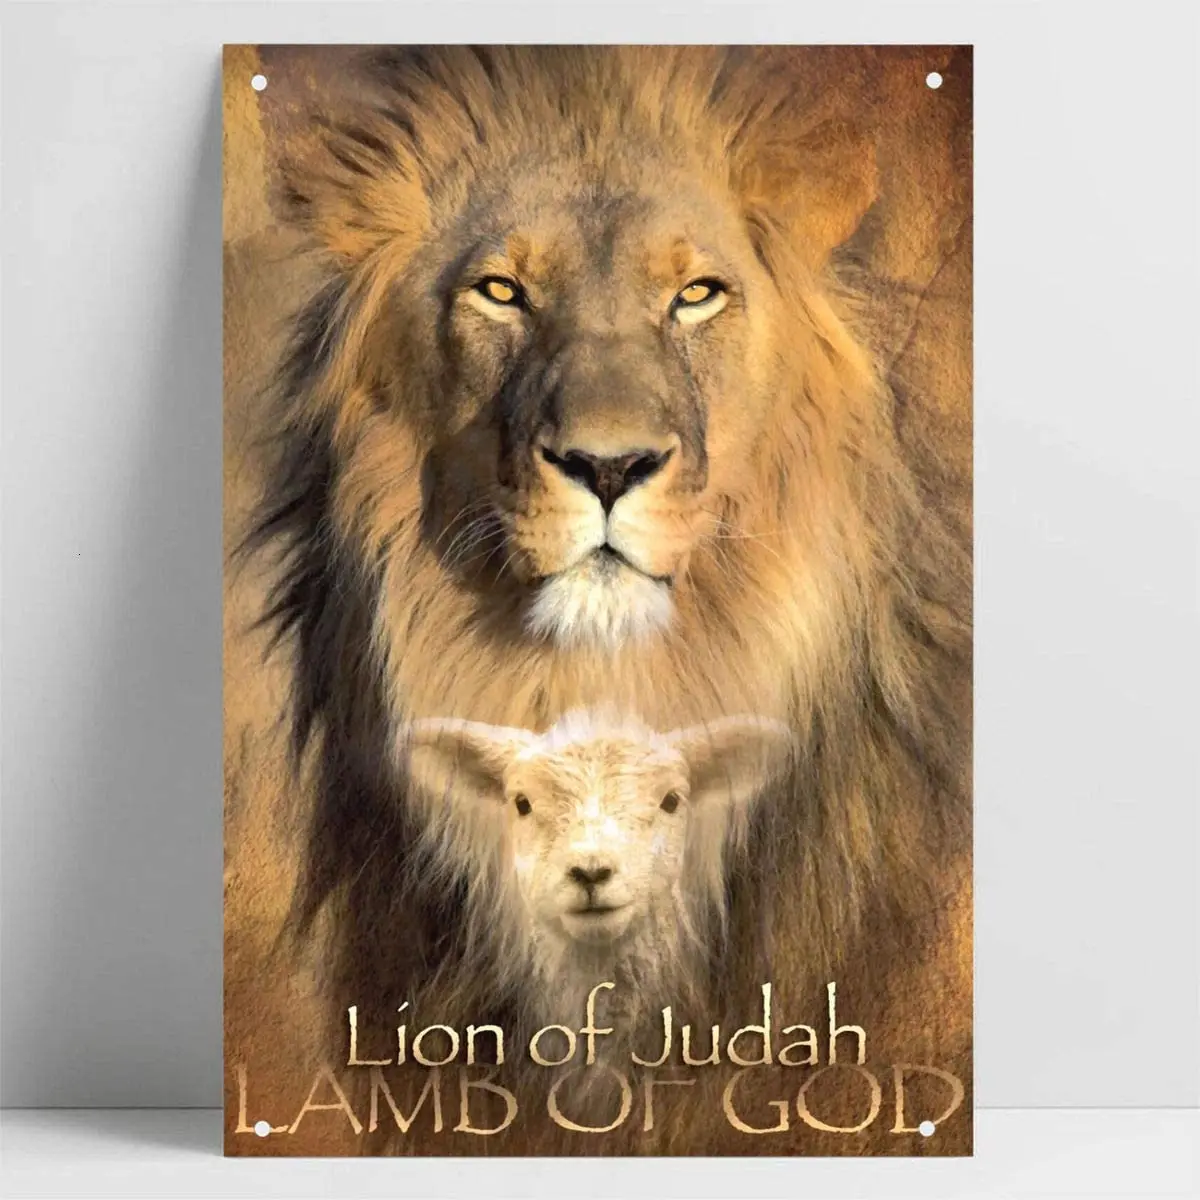 

Lion of Judah Lamb of GOD Religious Poster Tin Painting Tin Sign Metal Sign Bar Pub Home Wall Decoration Vintage Metal Poster